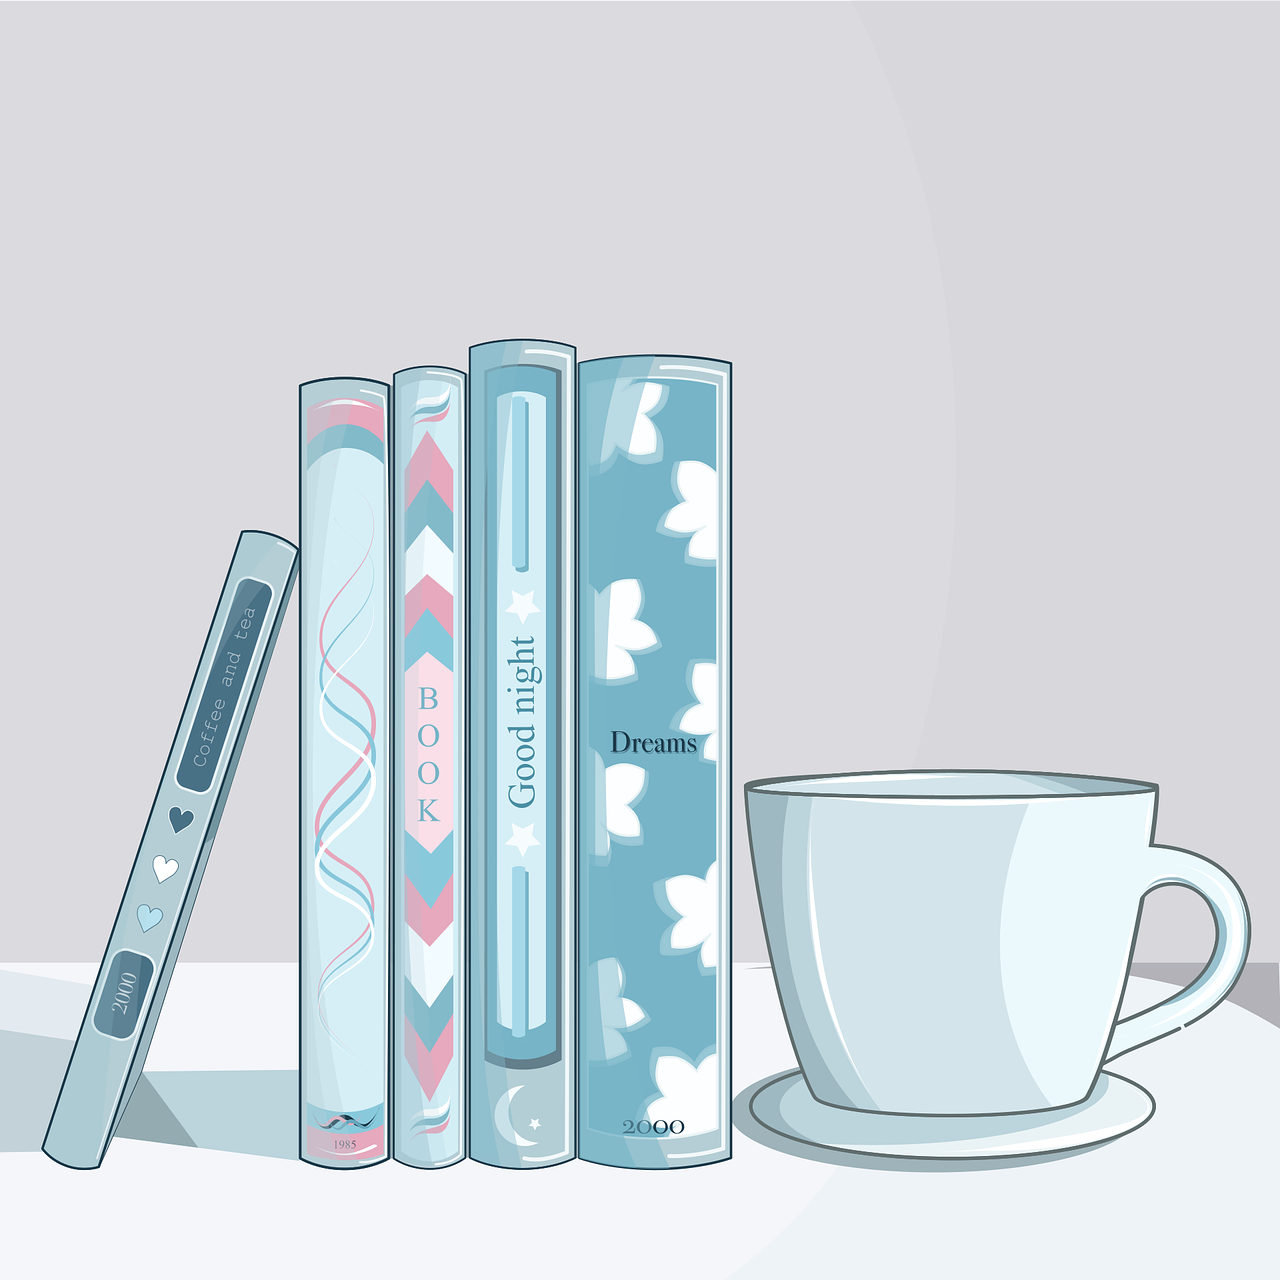 books, coffee cup, digital art-7309019.jpg